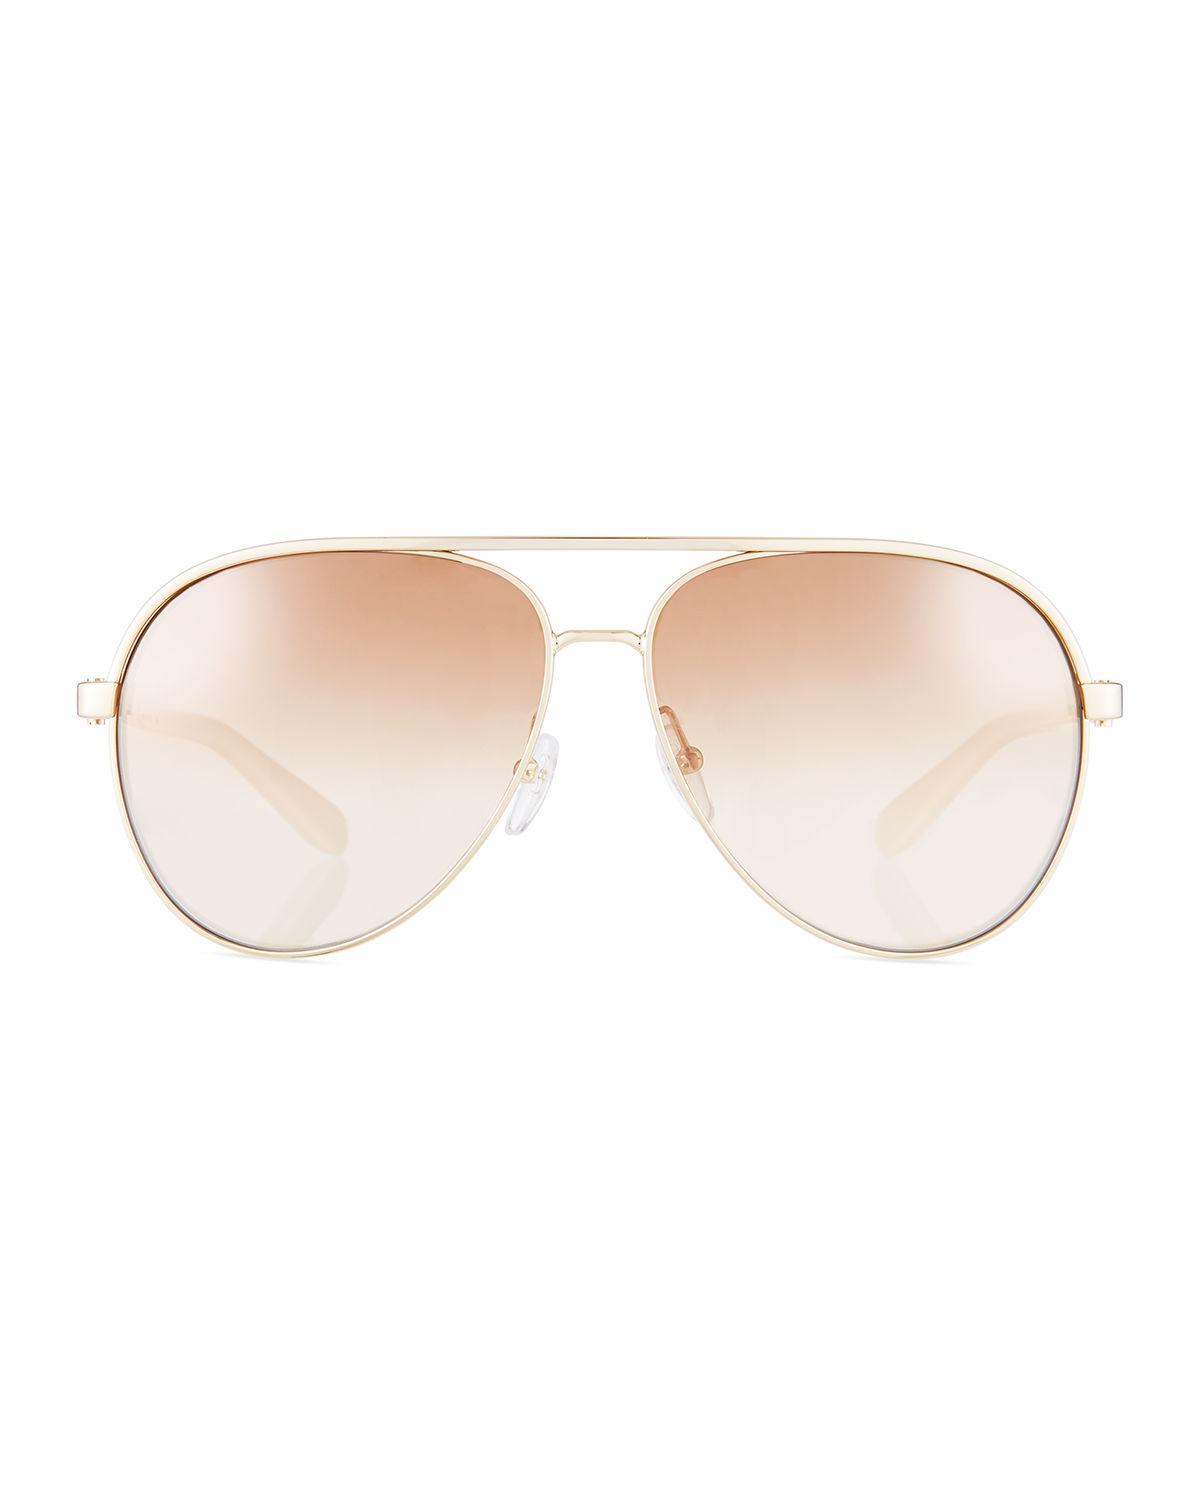 Ferragamo Mirrored Aviator Sunglasses W/ Contrast Brow Bar - Lyst